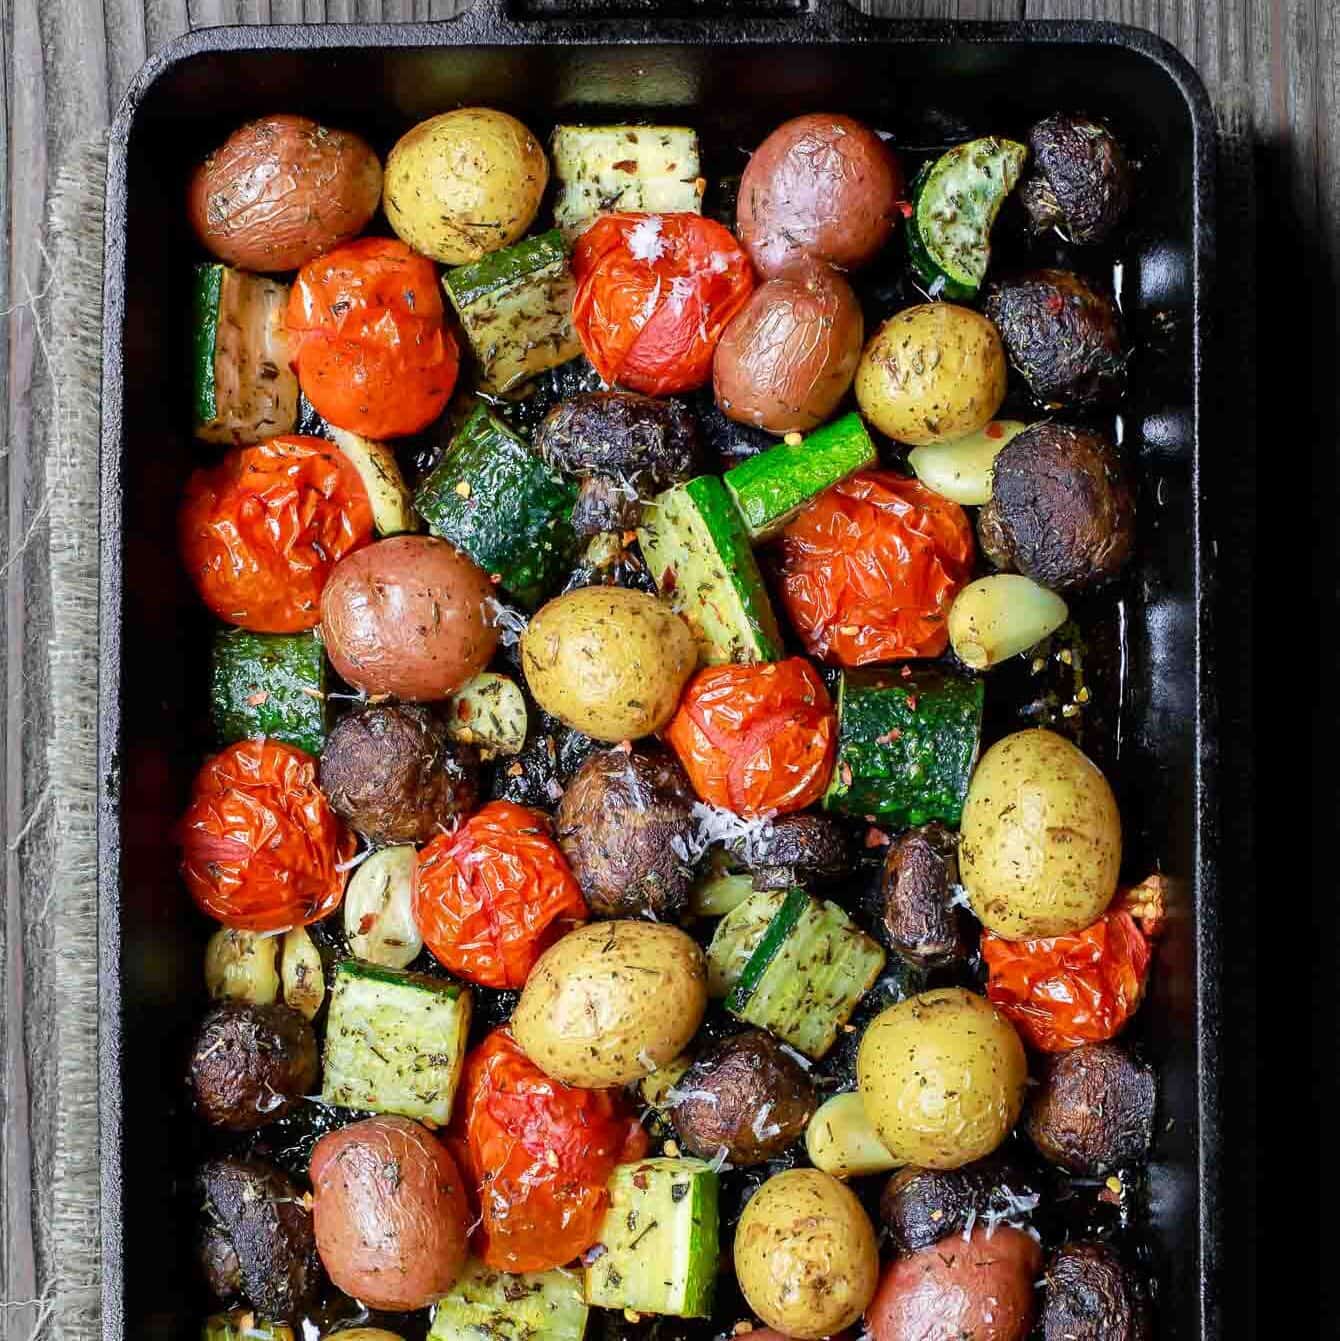 Roasted vegetables in large baking pan